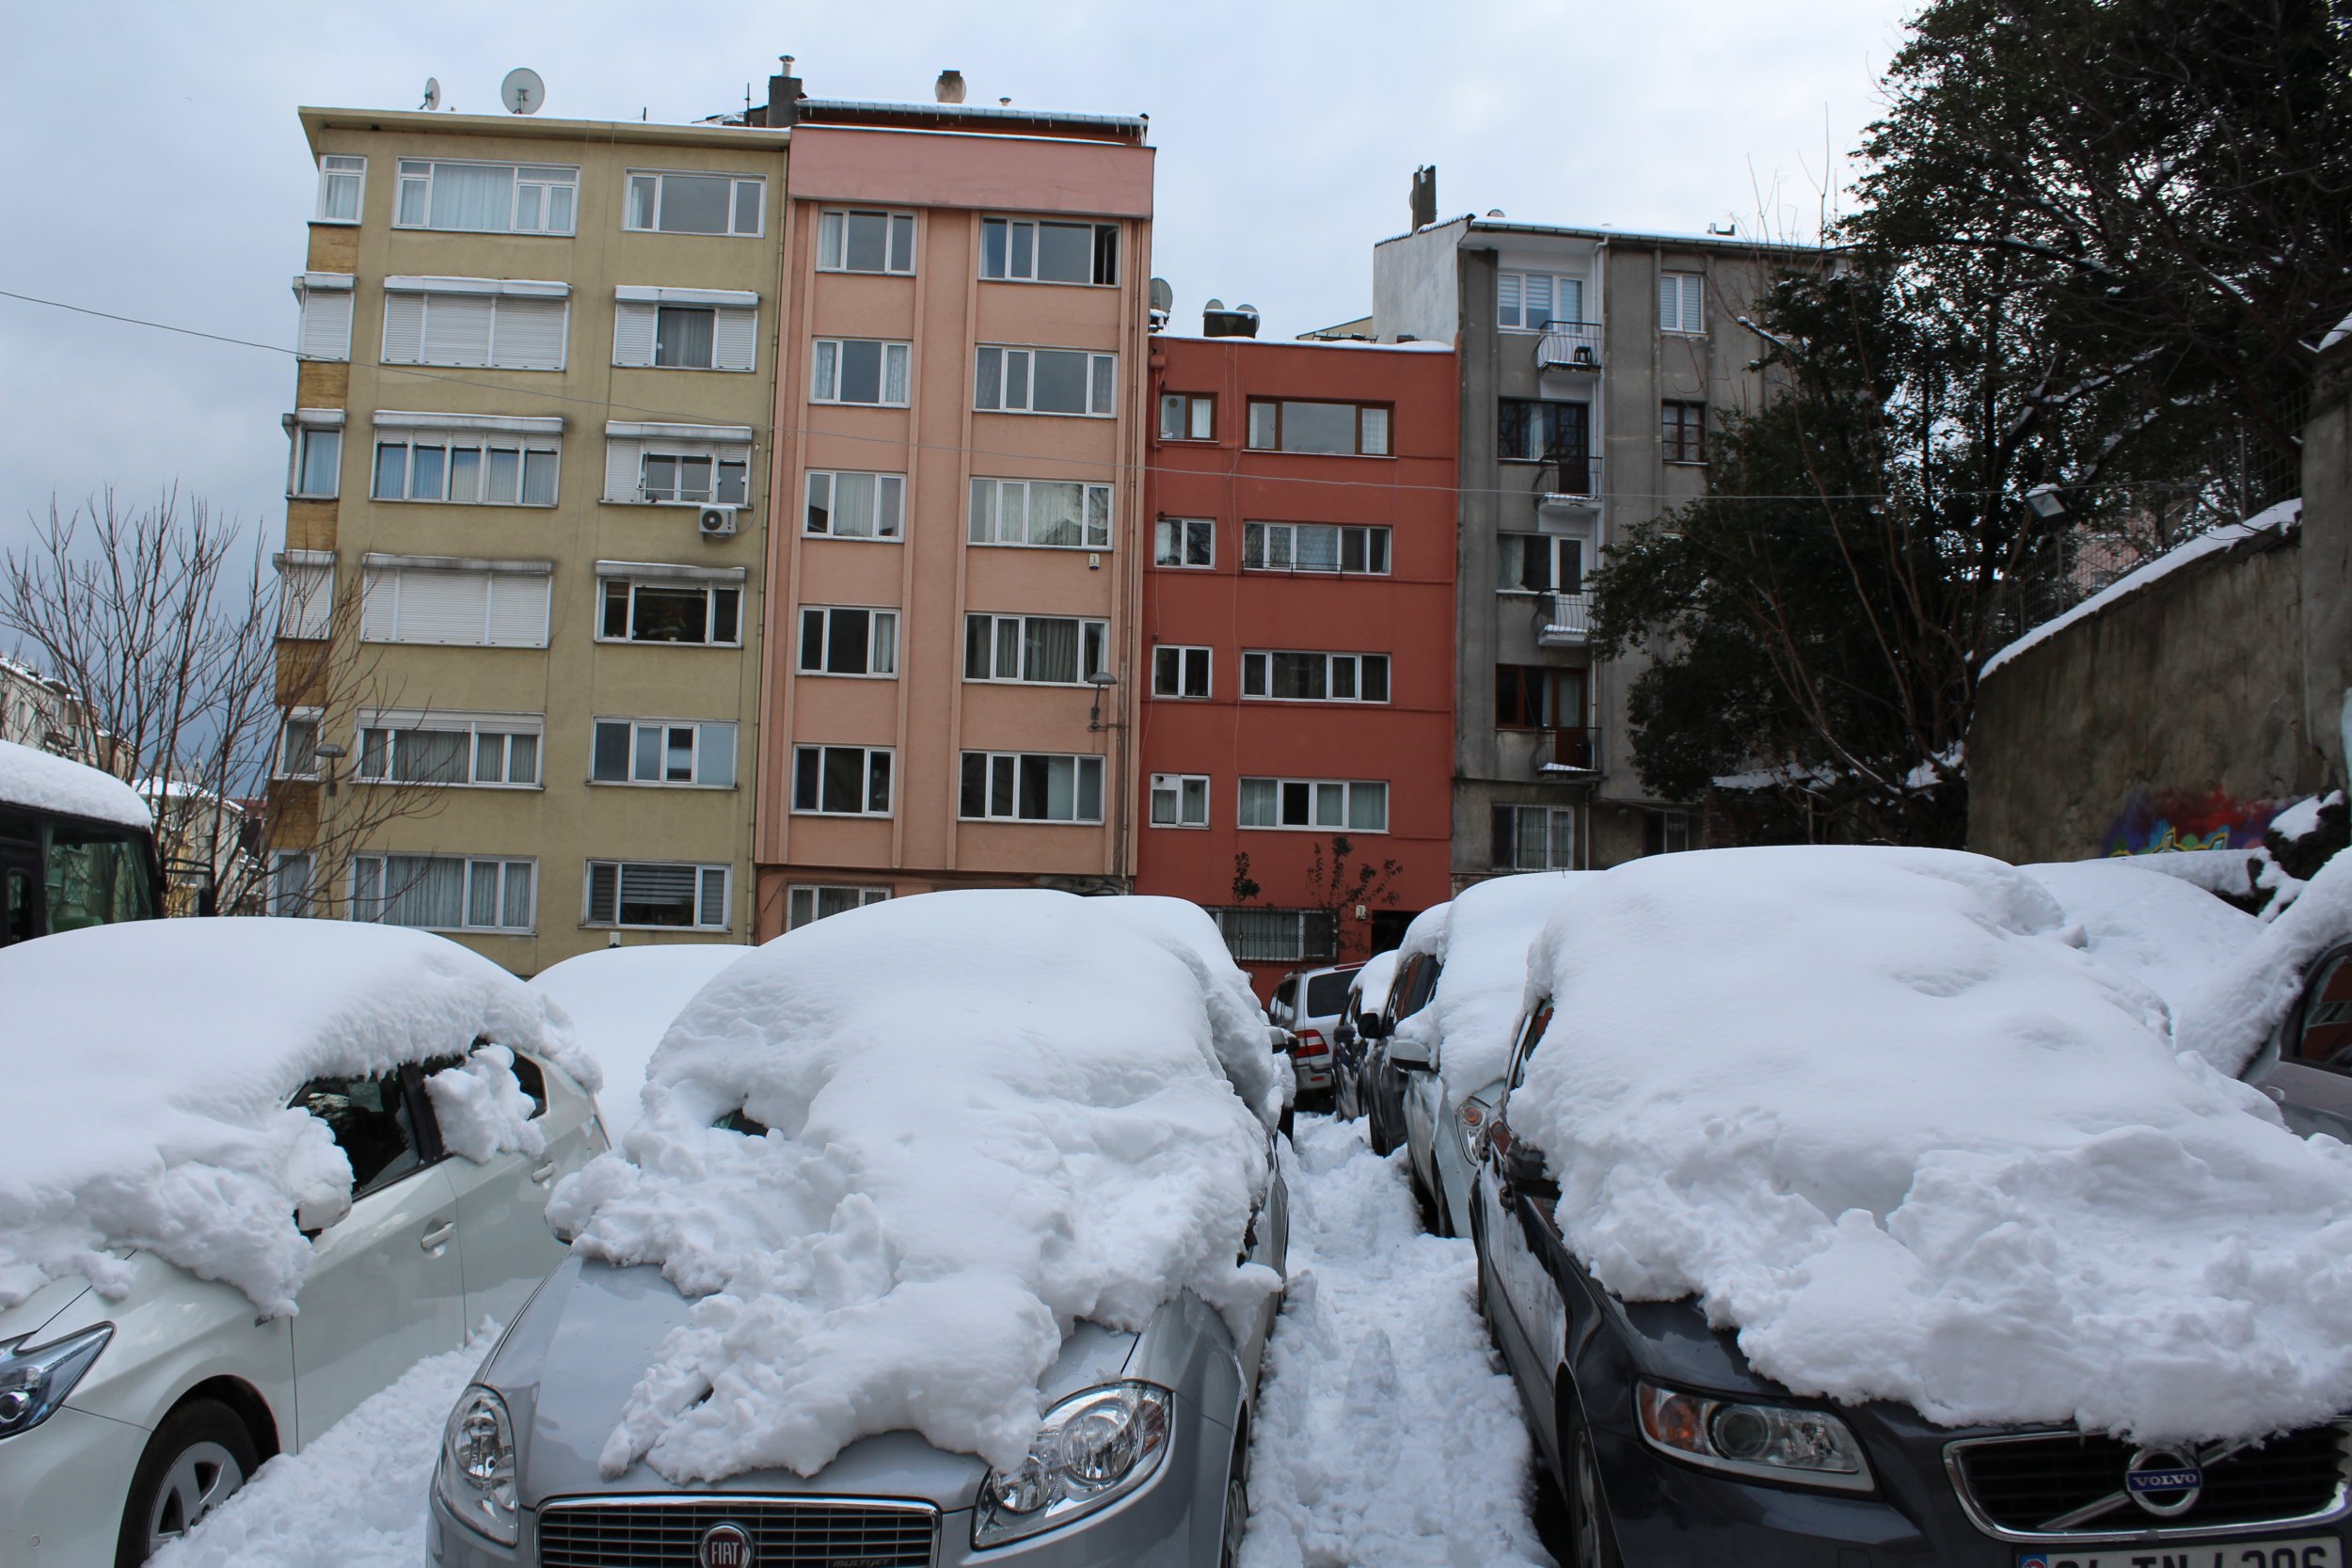 Istanbul snowstorm